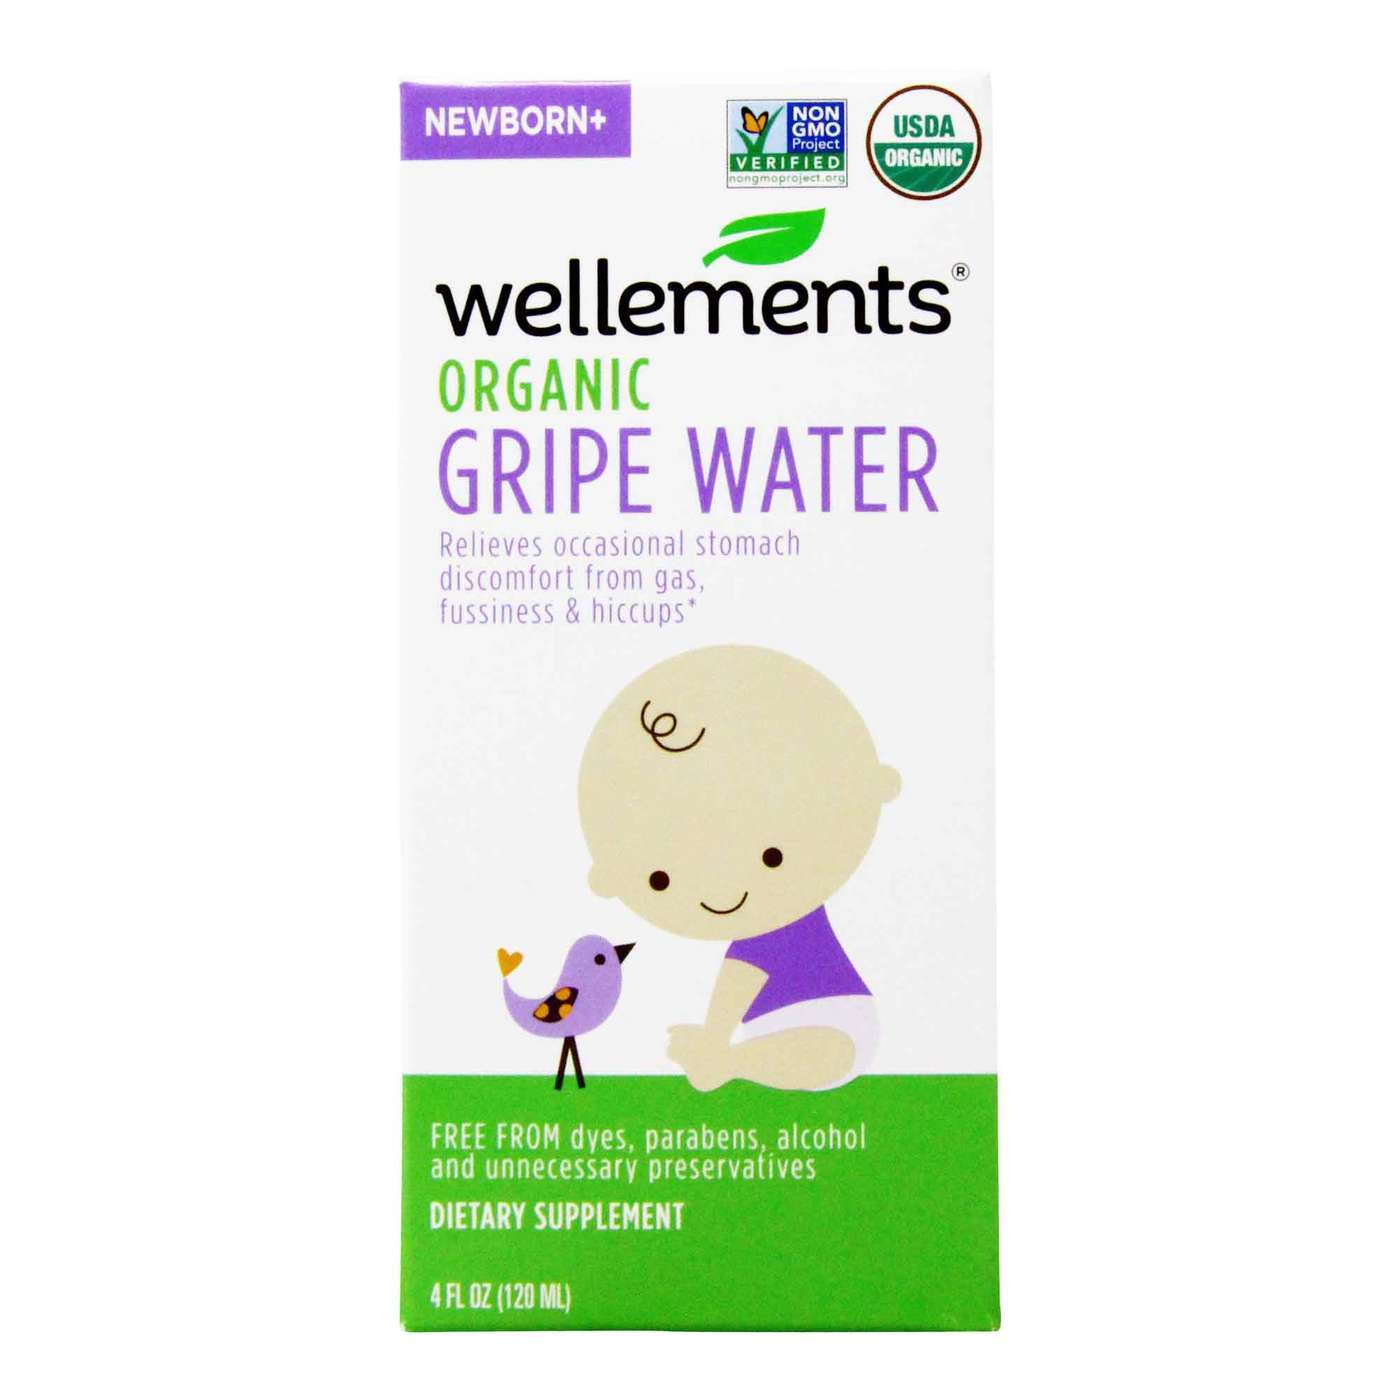 Wellements Organic Gripe Water - 4 fl oz (120 ml) 